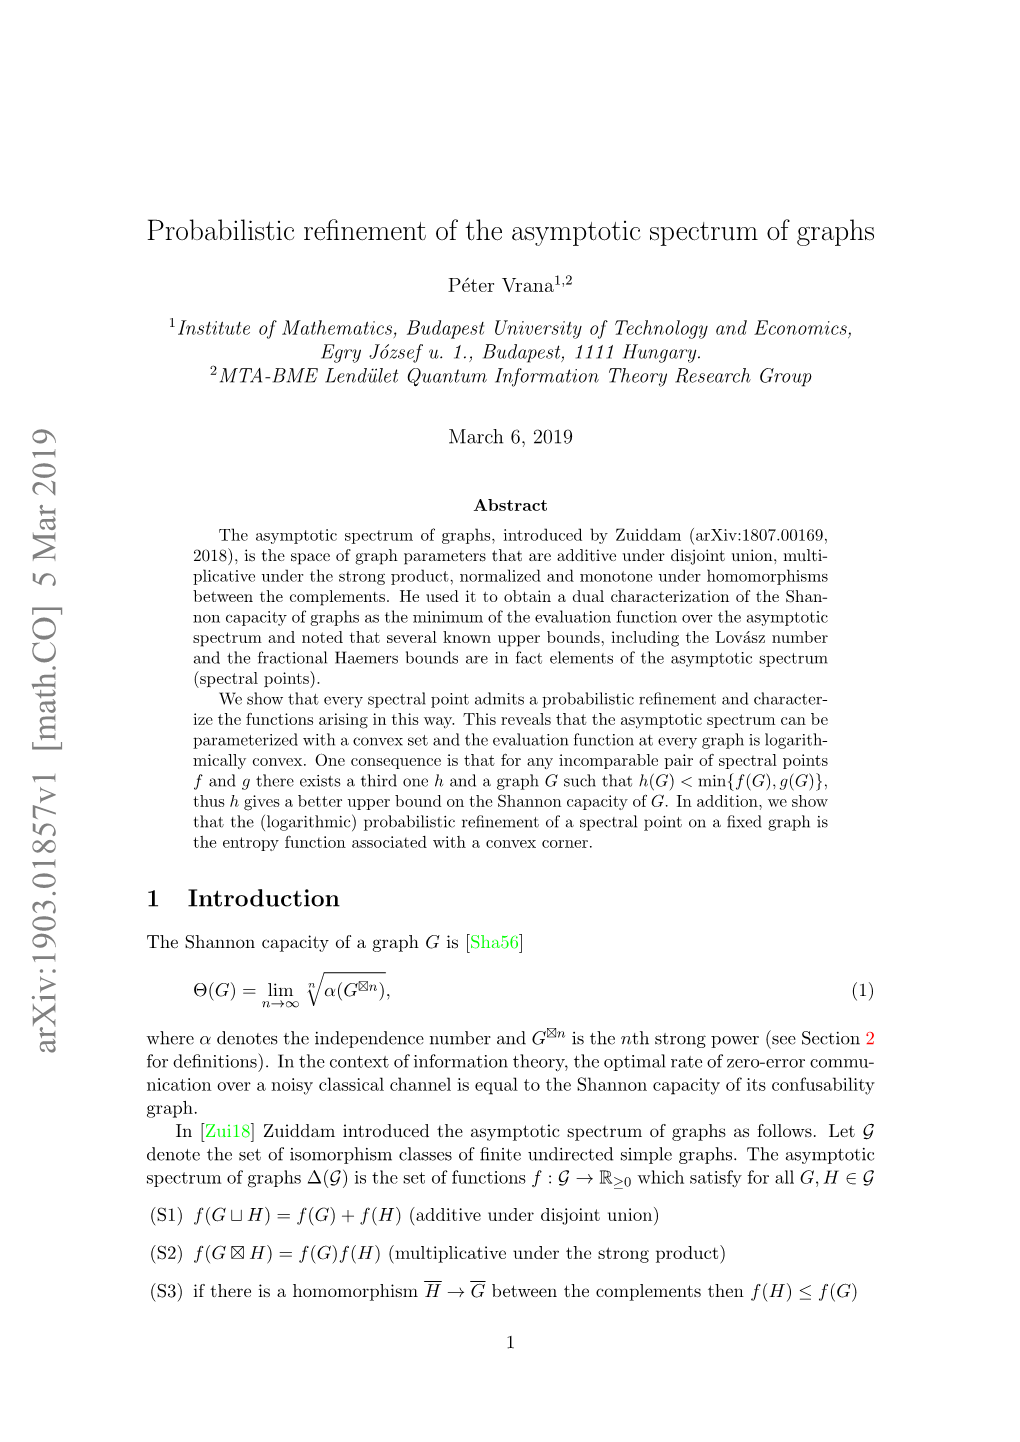 Probabilistic Refinement of the Asymptotic Spectrum of Graphs